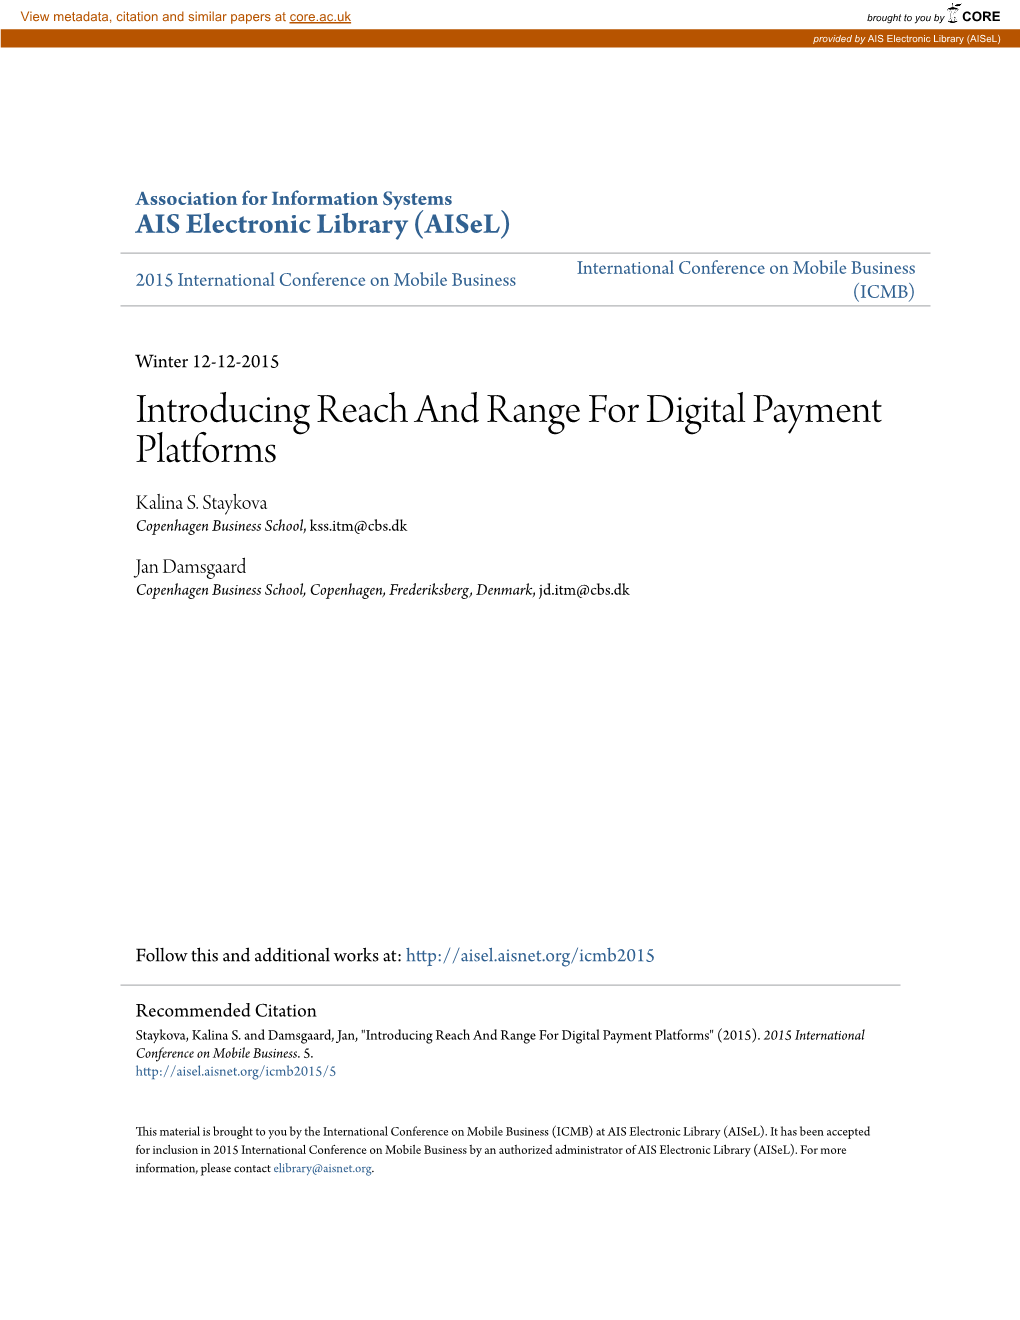 Introducing Reach and Range for Digital Payment Platforms Kalina S